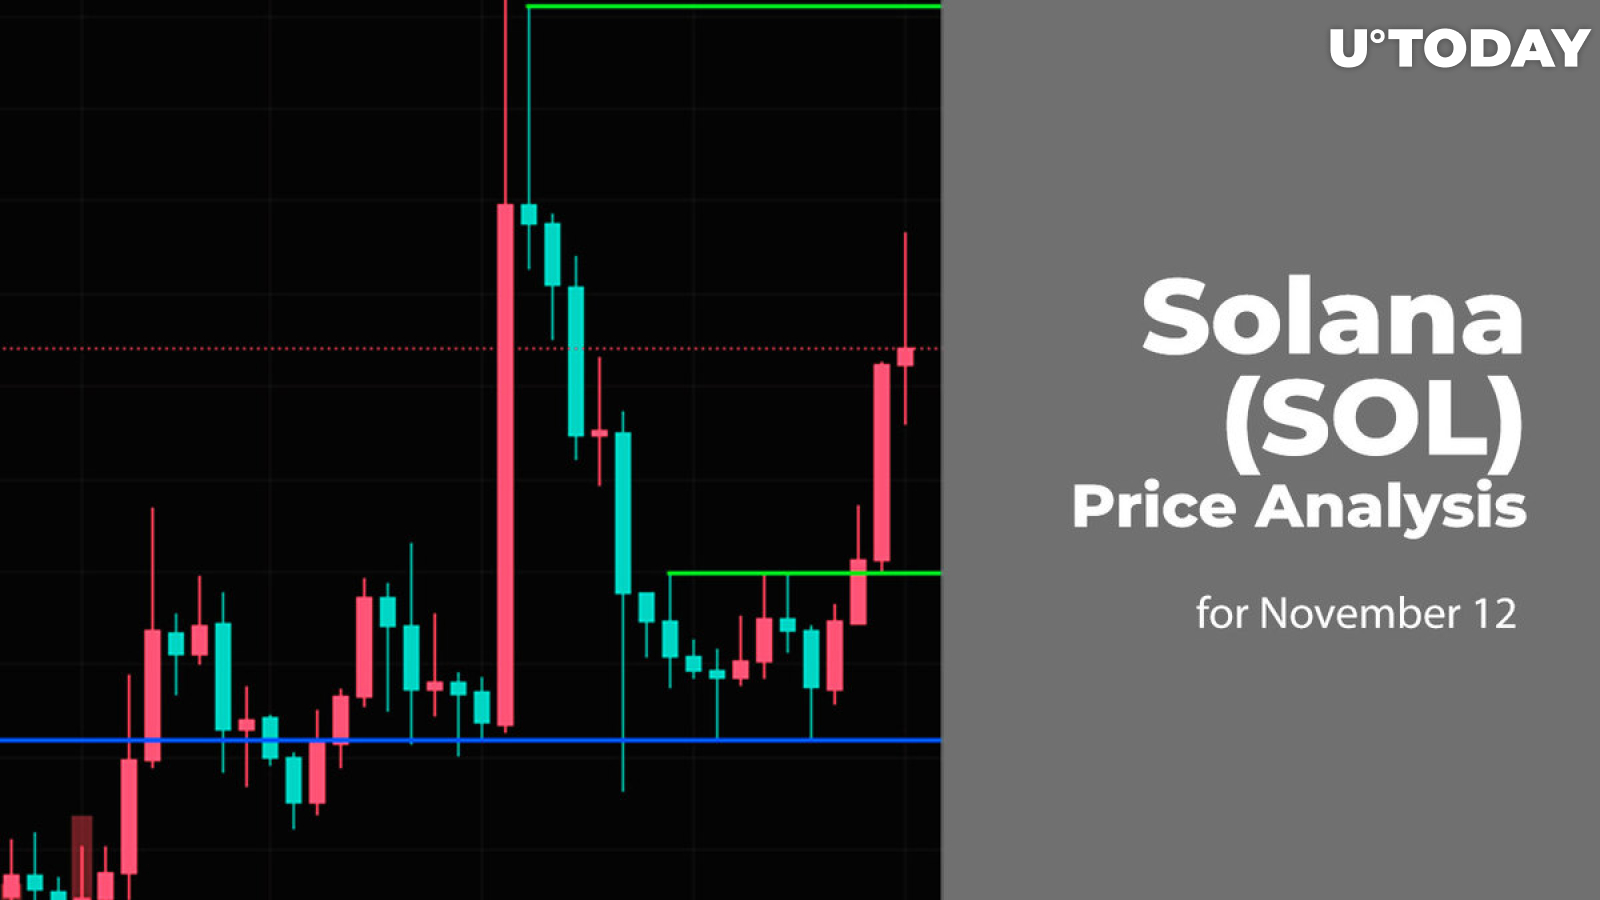 Solana (SOL) Price Analysis for November 12